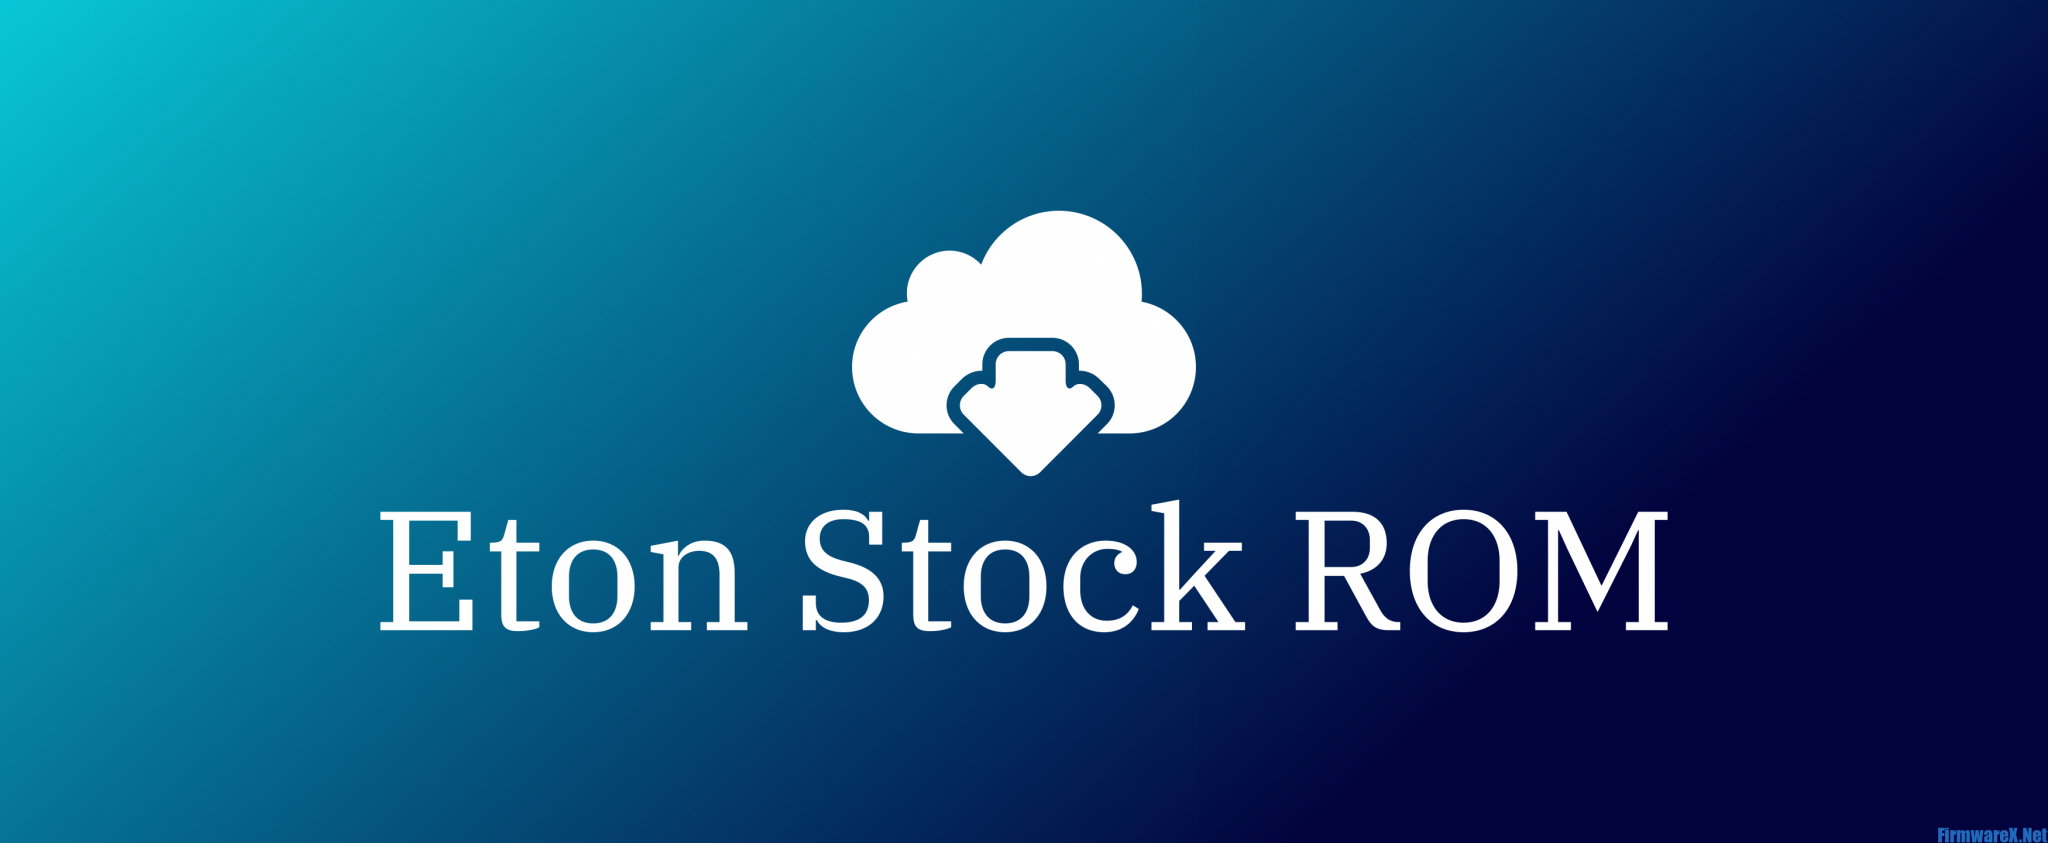 Eton Stock ROM